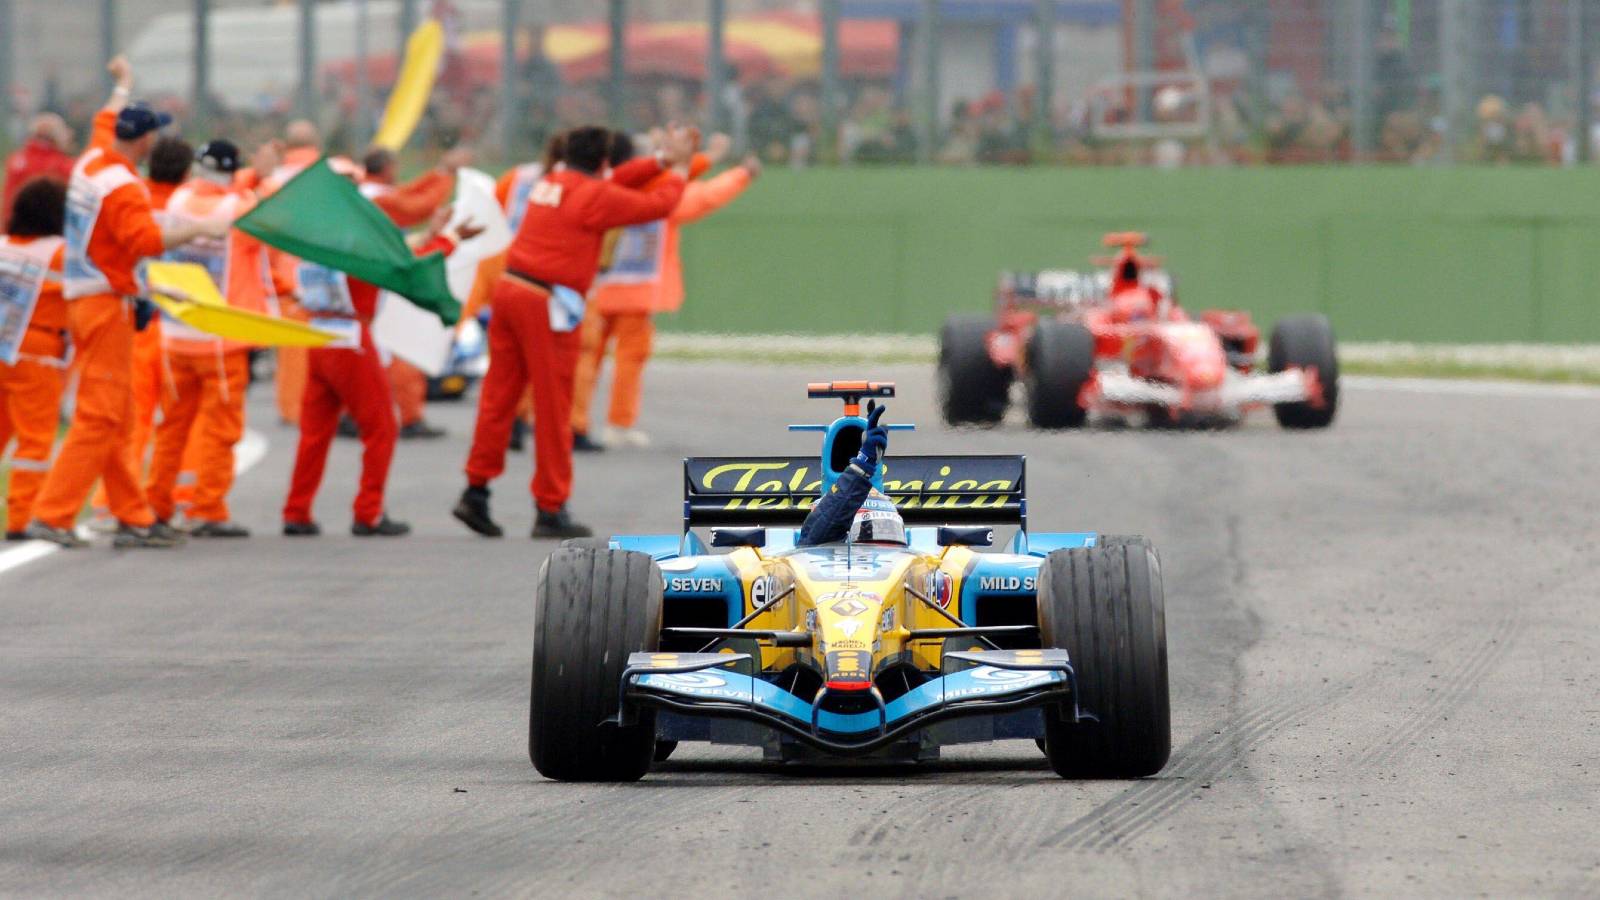 Formel 1 Pin F1 Grand Prix 2006 Imola mit Strecke Maße 33x40mm 